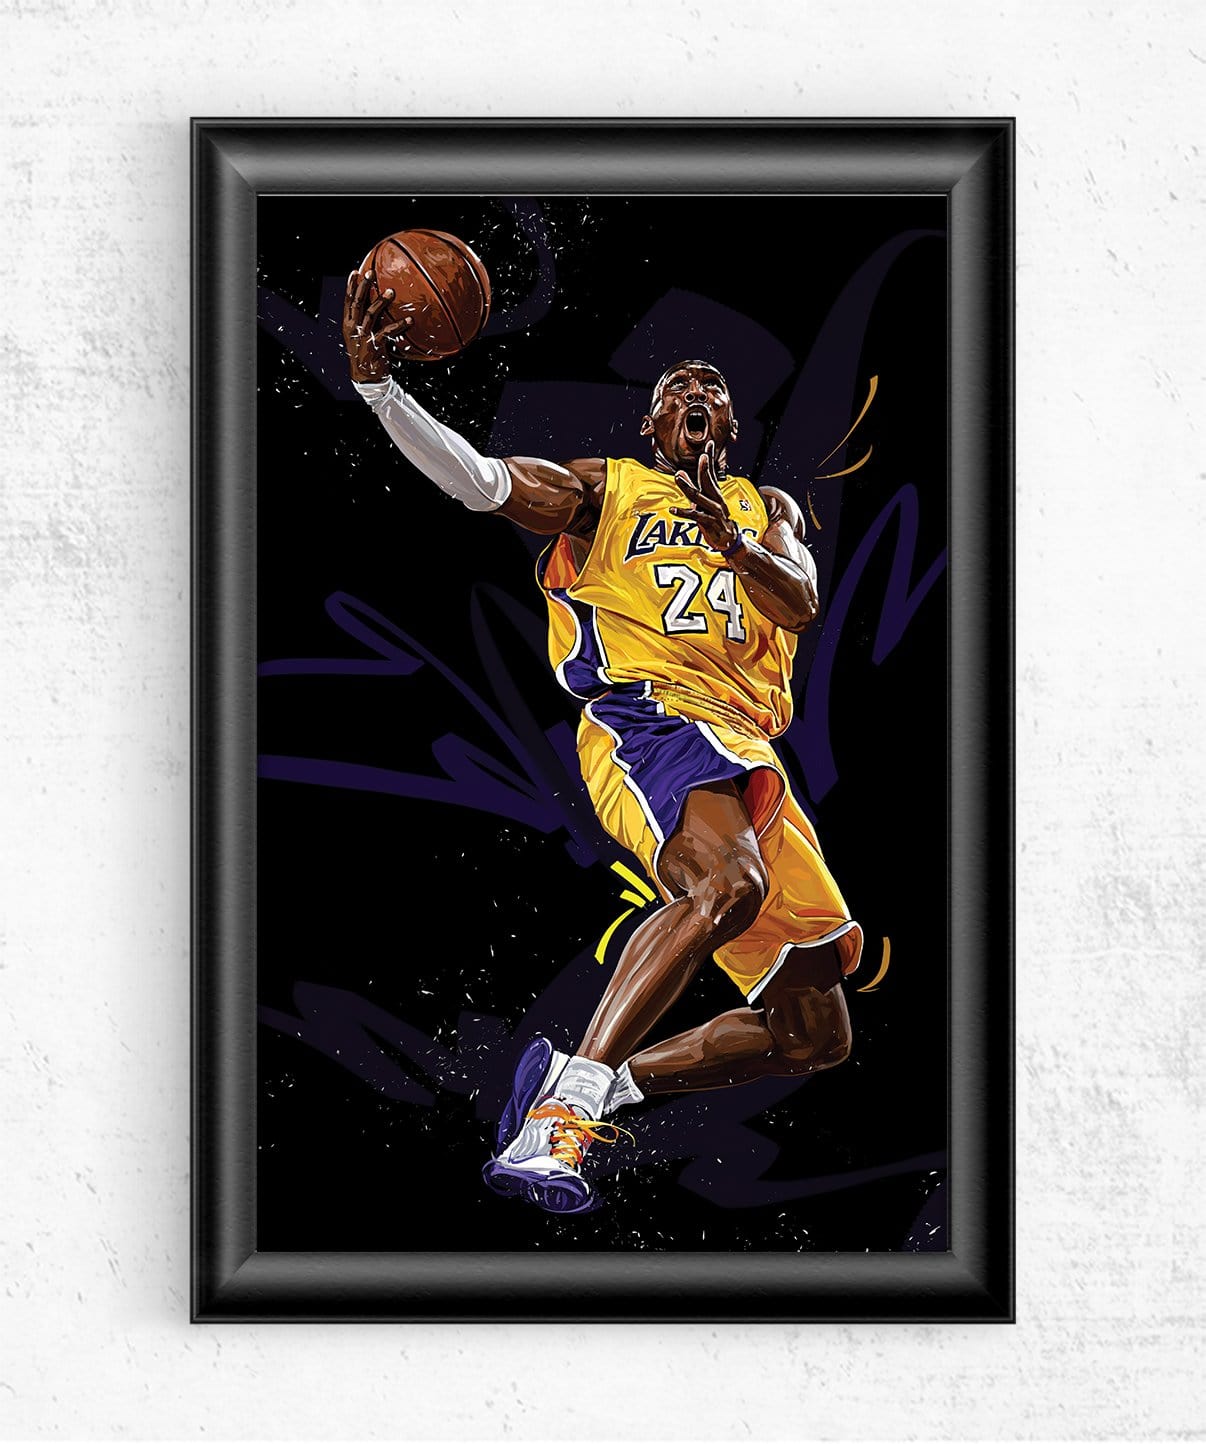 Kobe Bryant Basketball 3 Digit by 2 Digit Multiplication Mystery Pixel Art